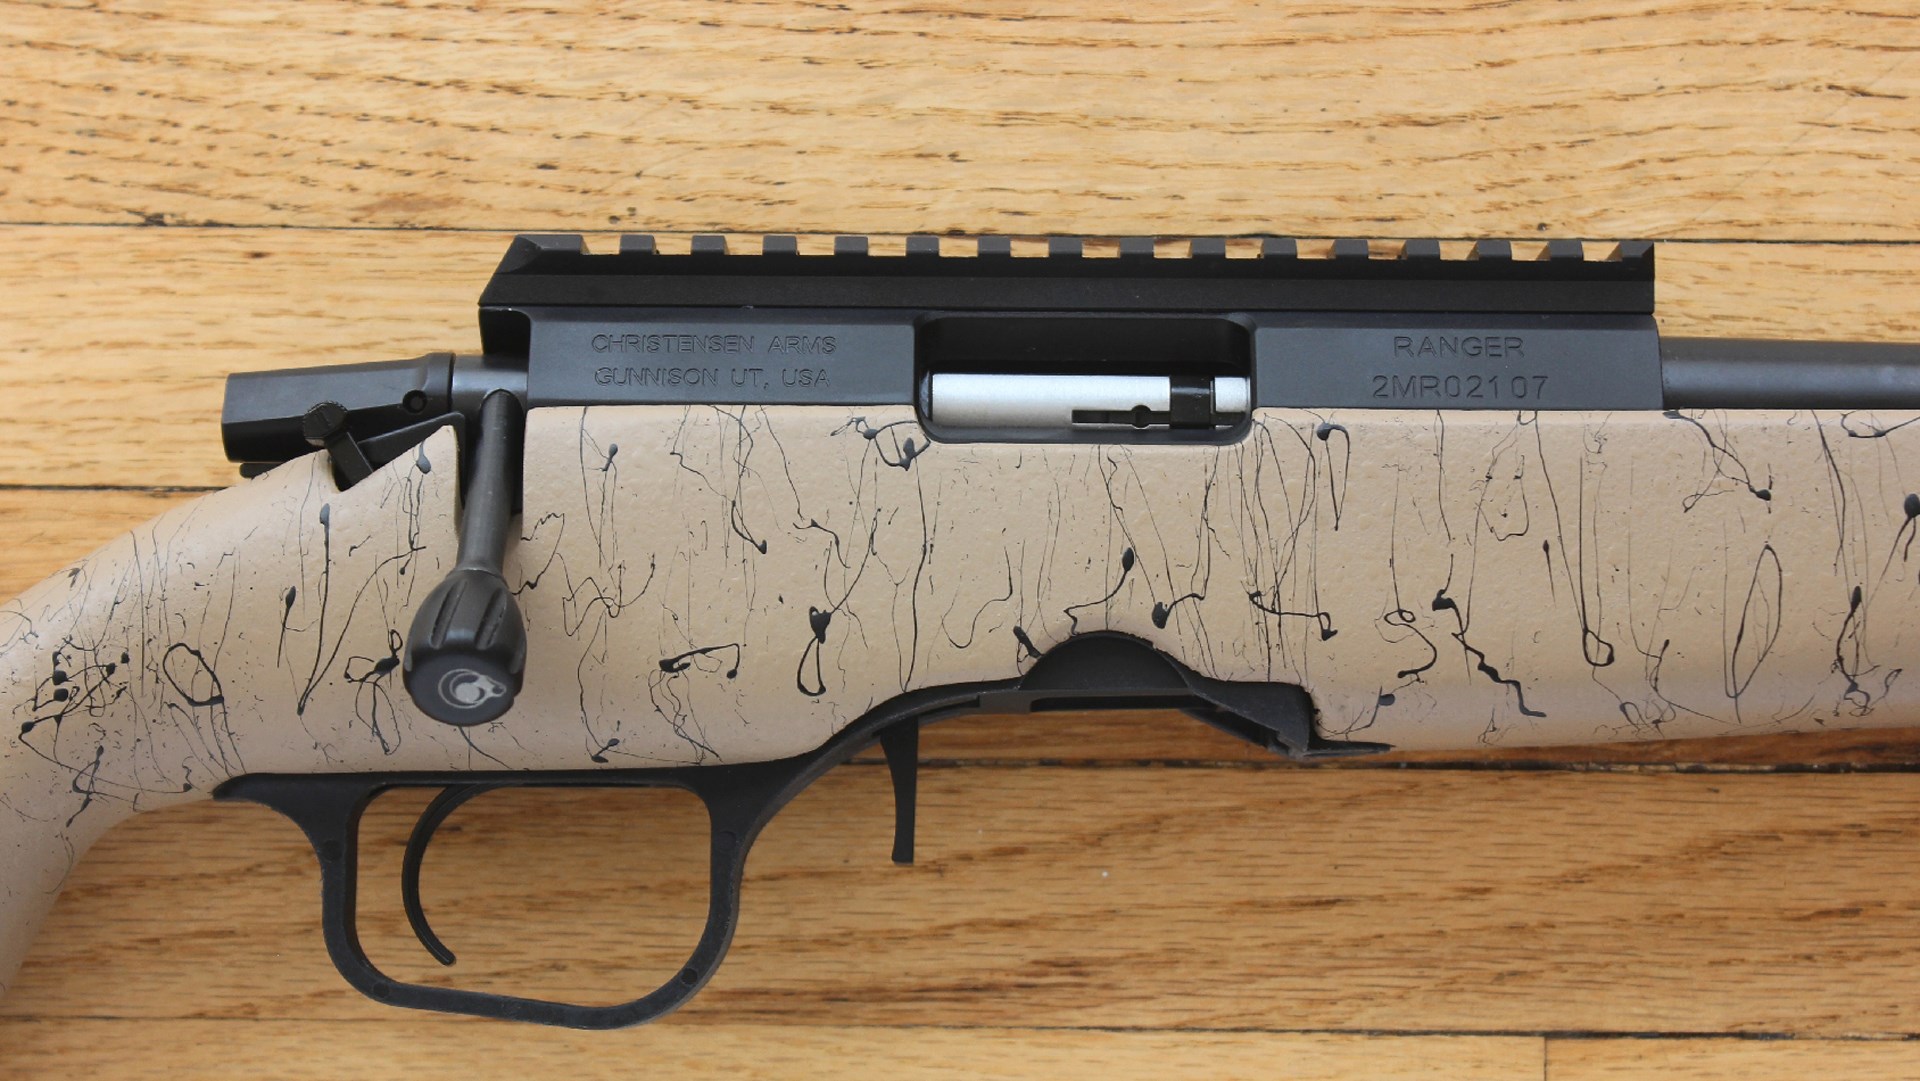 Christensen Arms Ranger bolt-action rifle FDE finish splatter texture Picatinny rail for optics detail image on wood background